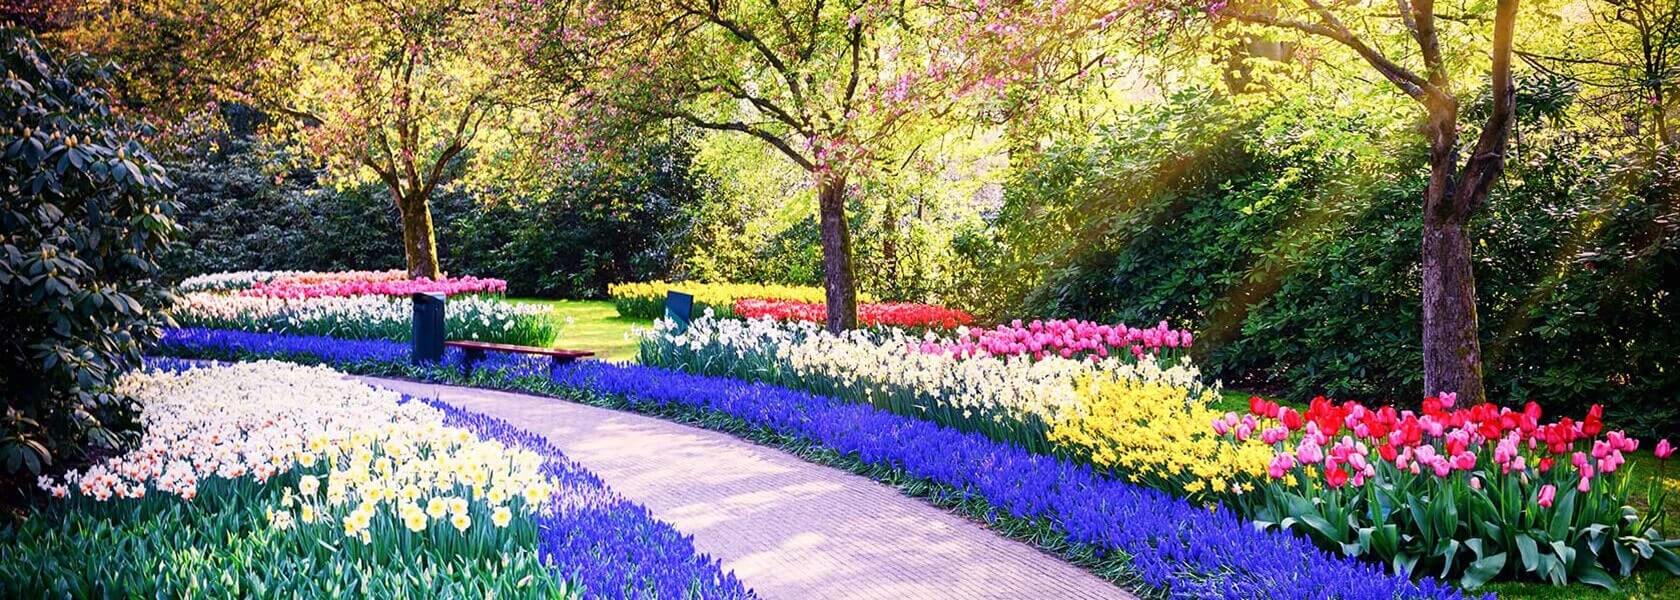 The Floriade Flower Show and Keukenhof Garden